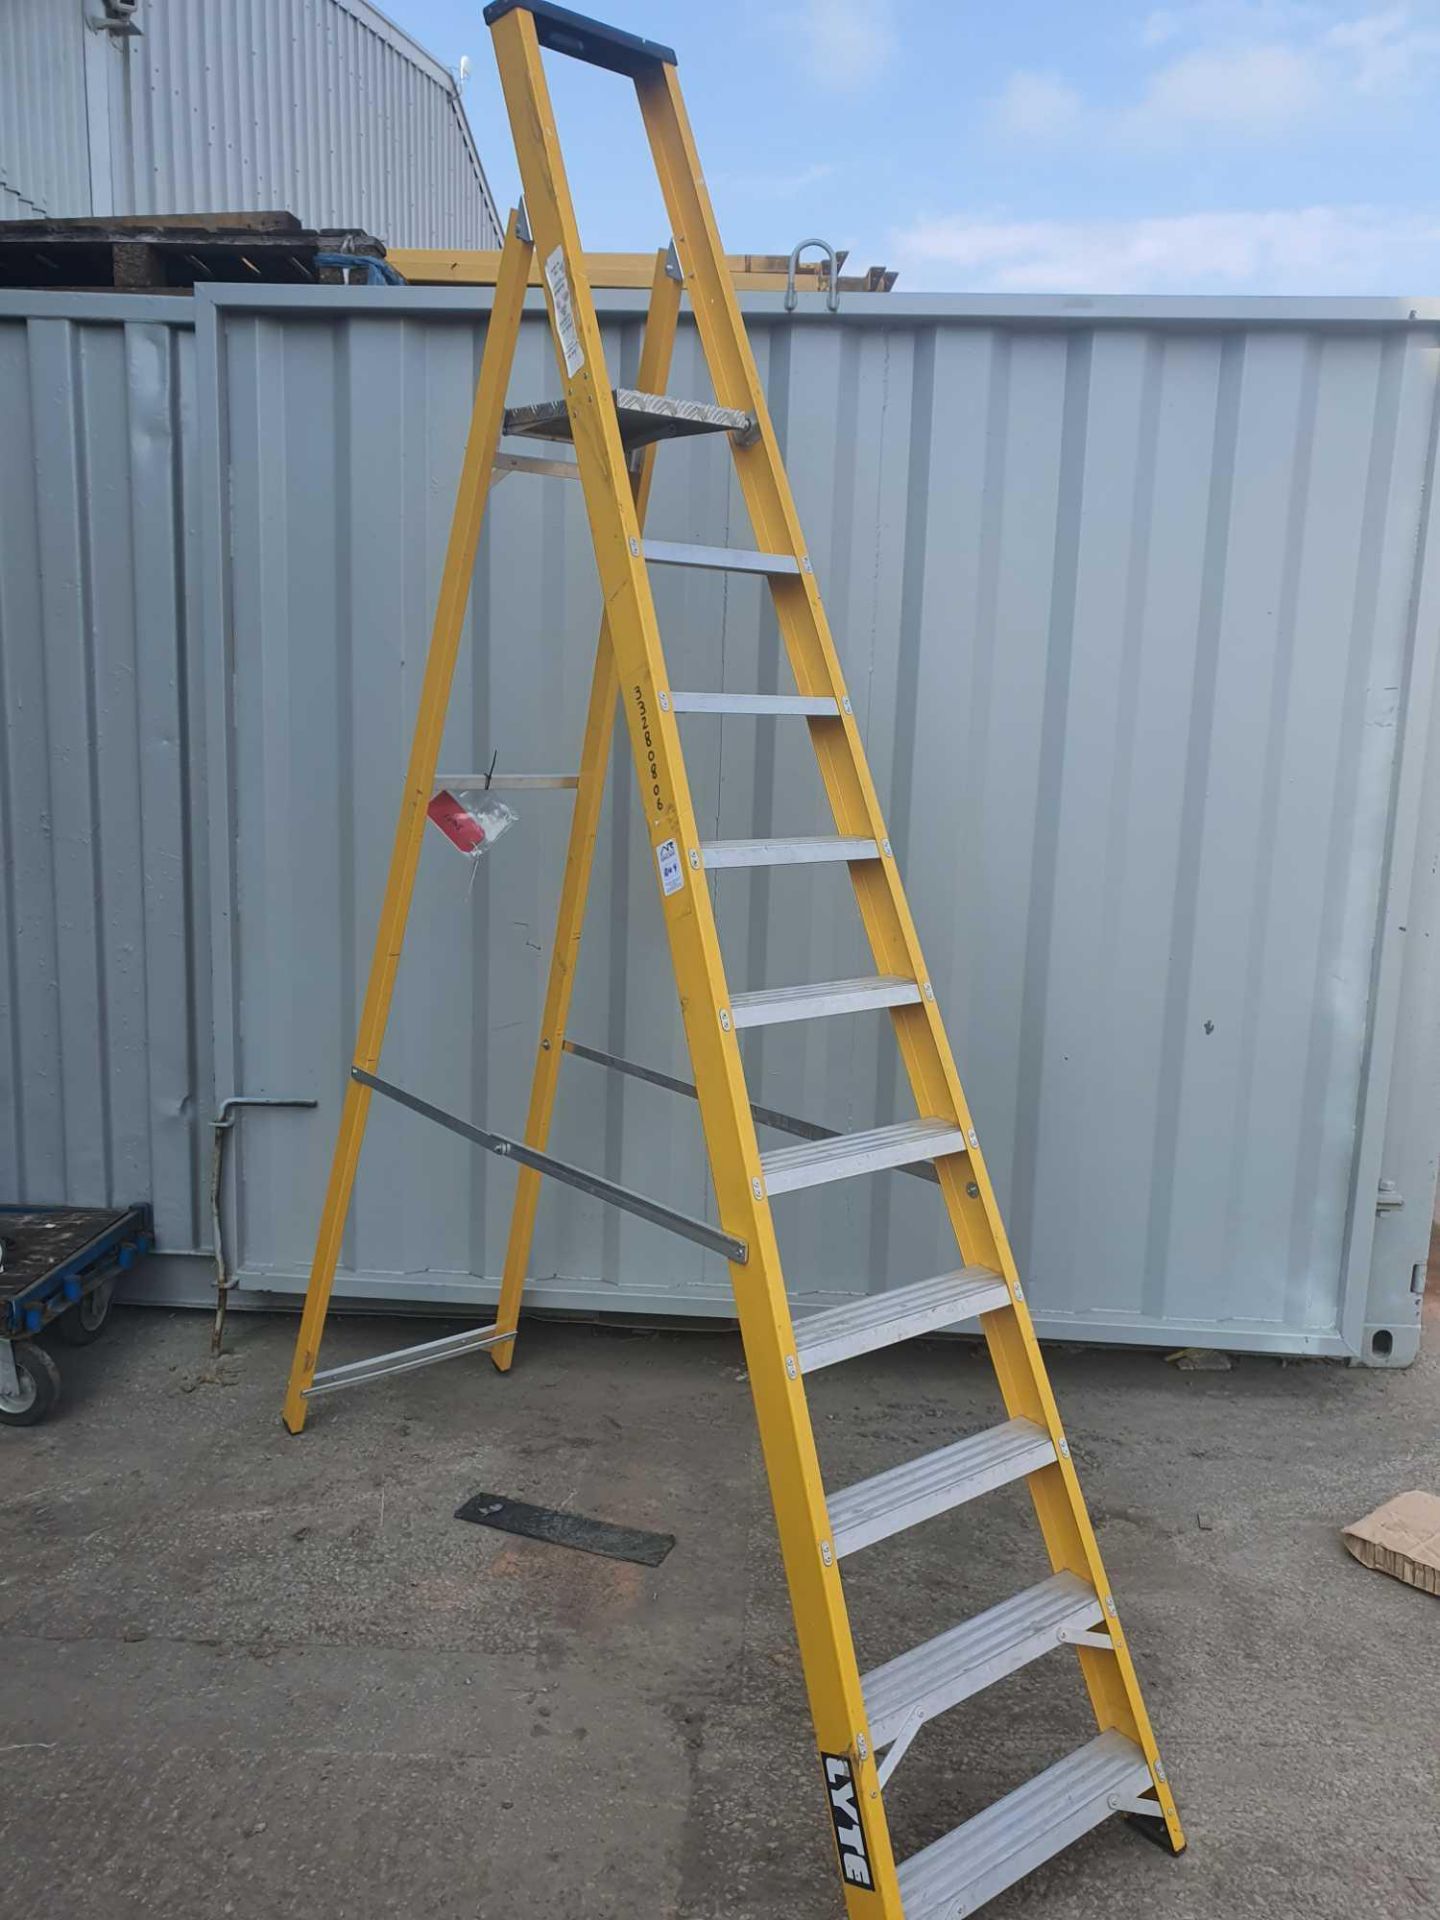 3 m high lyte step ladder - Image 2 of 2